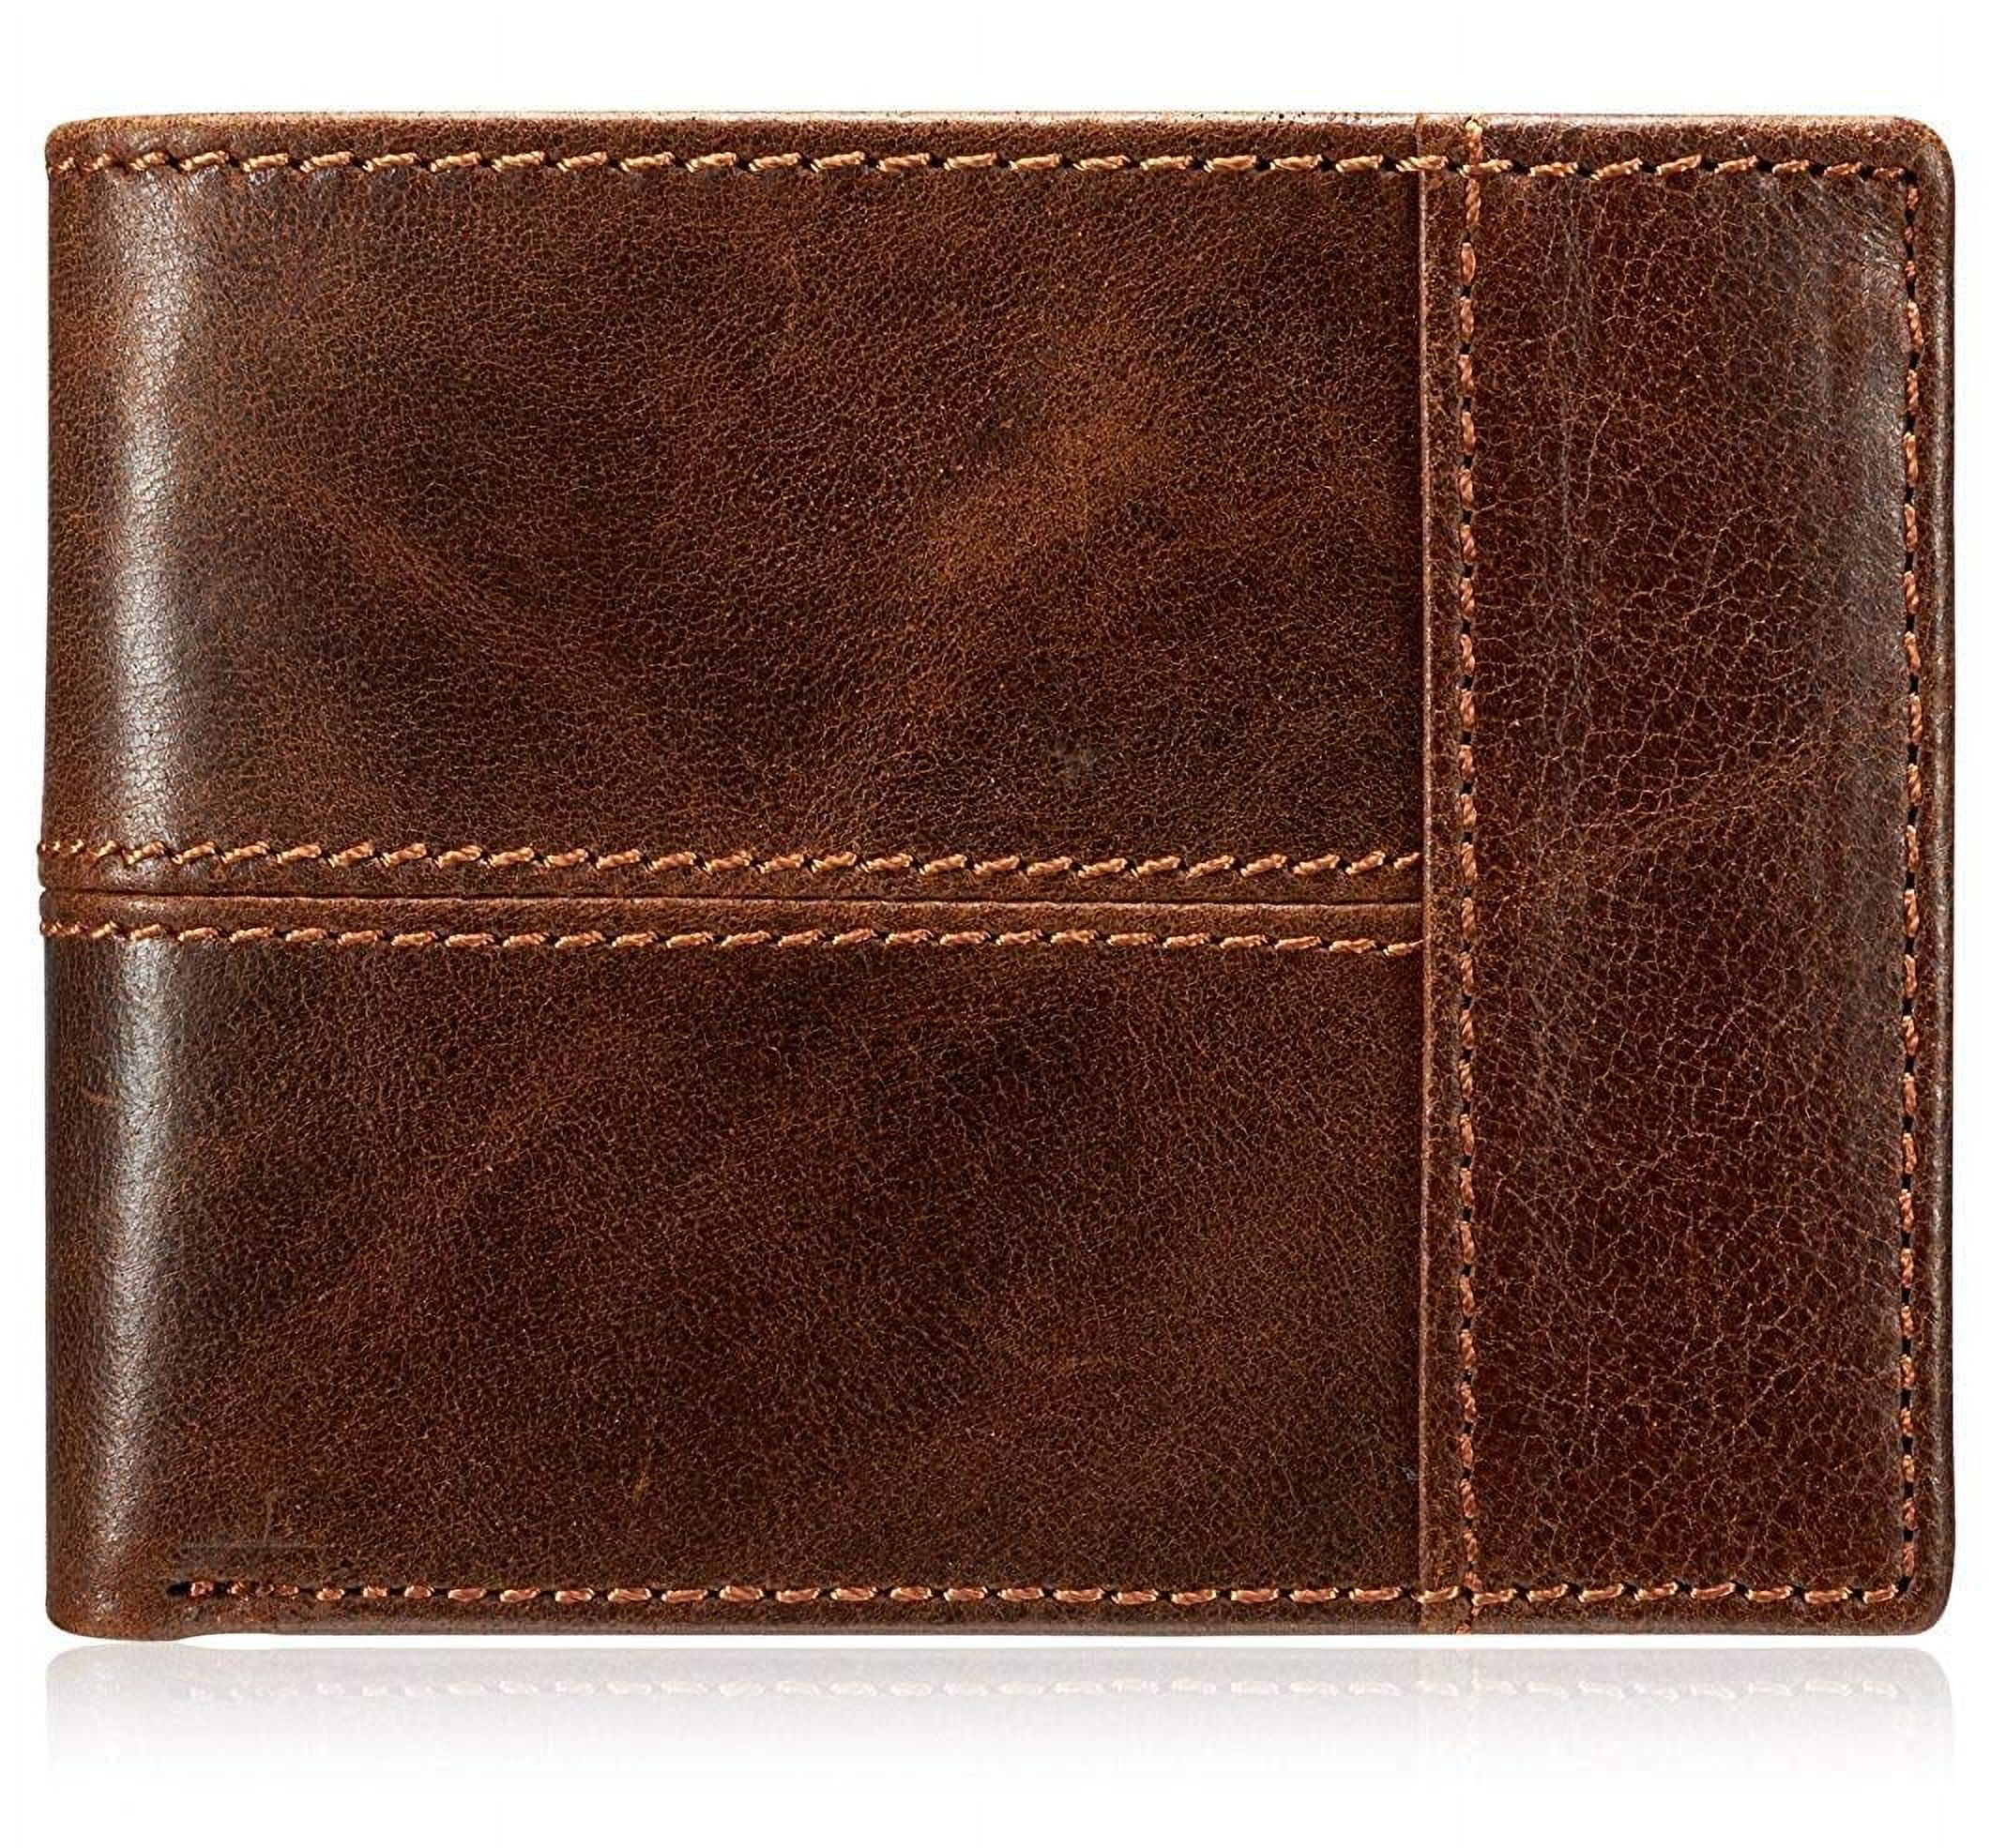 Wallets for women,genuine leather women wallets, Men's Classic Vintage Brown Genuine Premium Leather Handmade Bifold Zipper Card Wallet - image 1 of 7